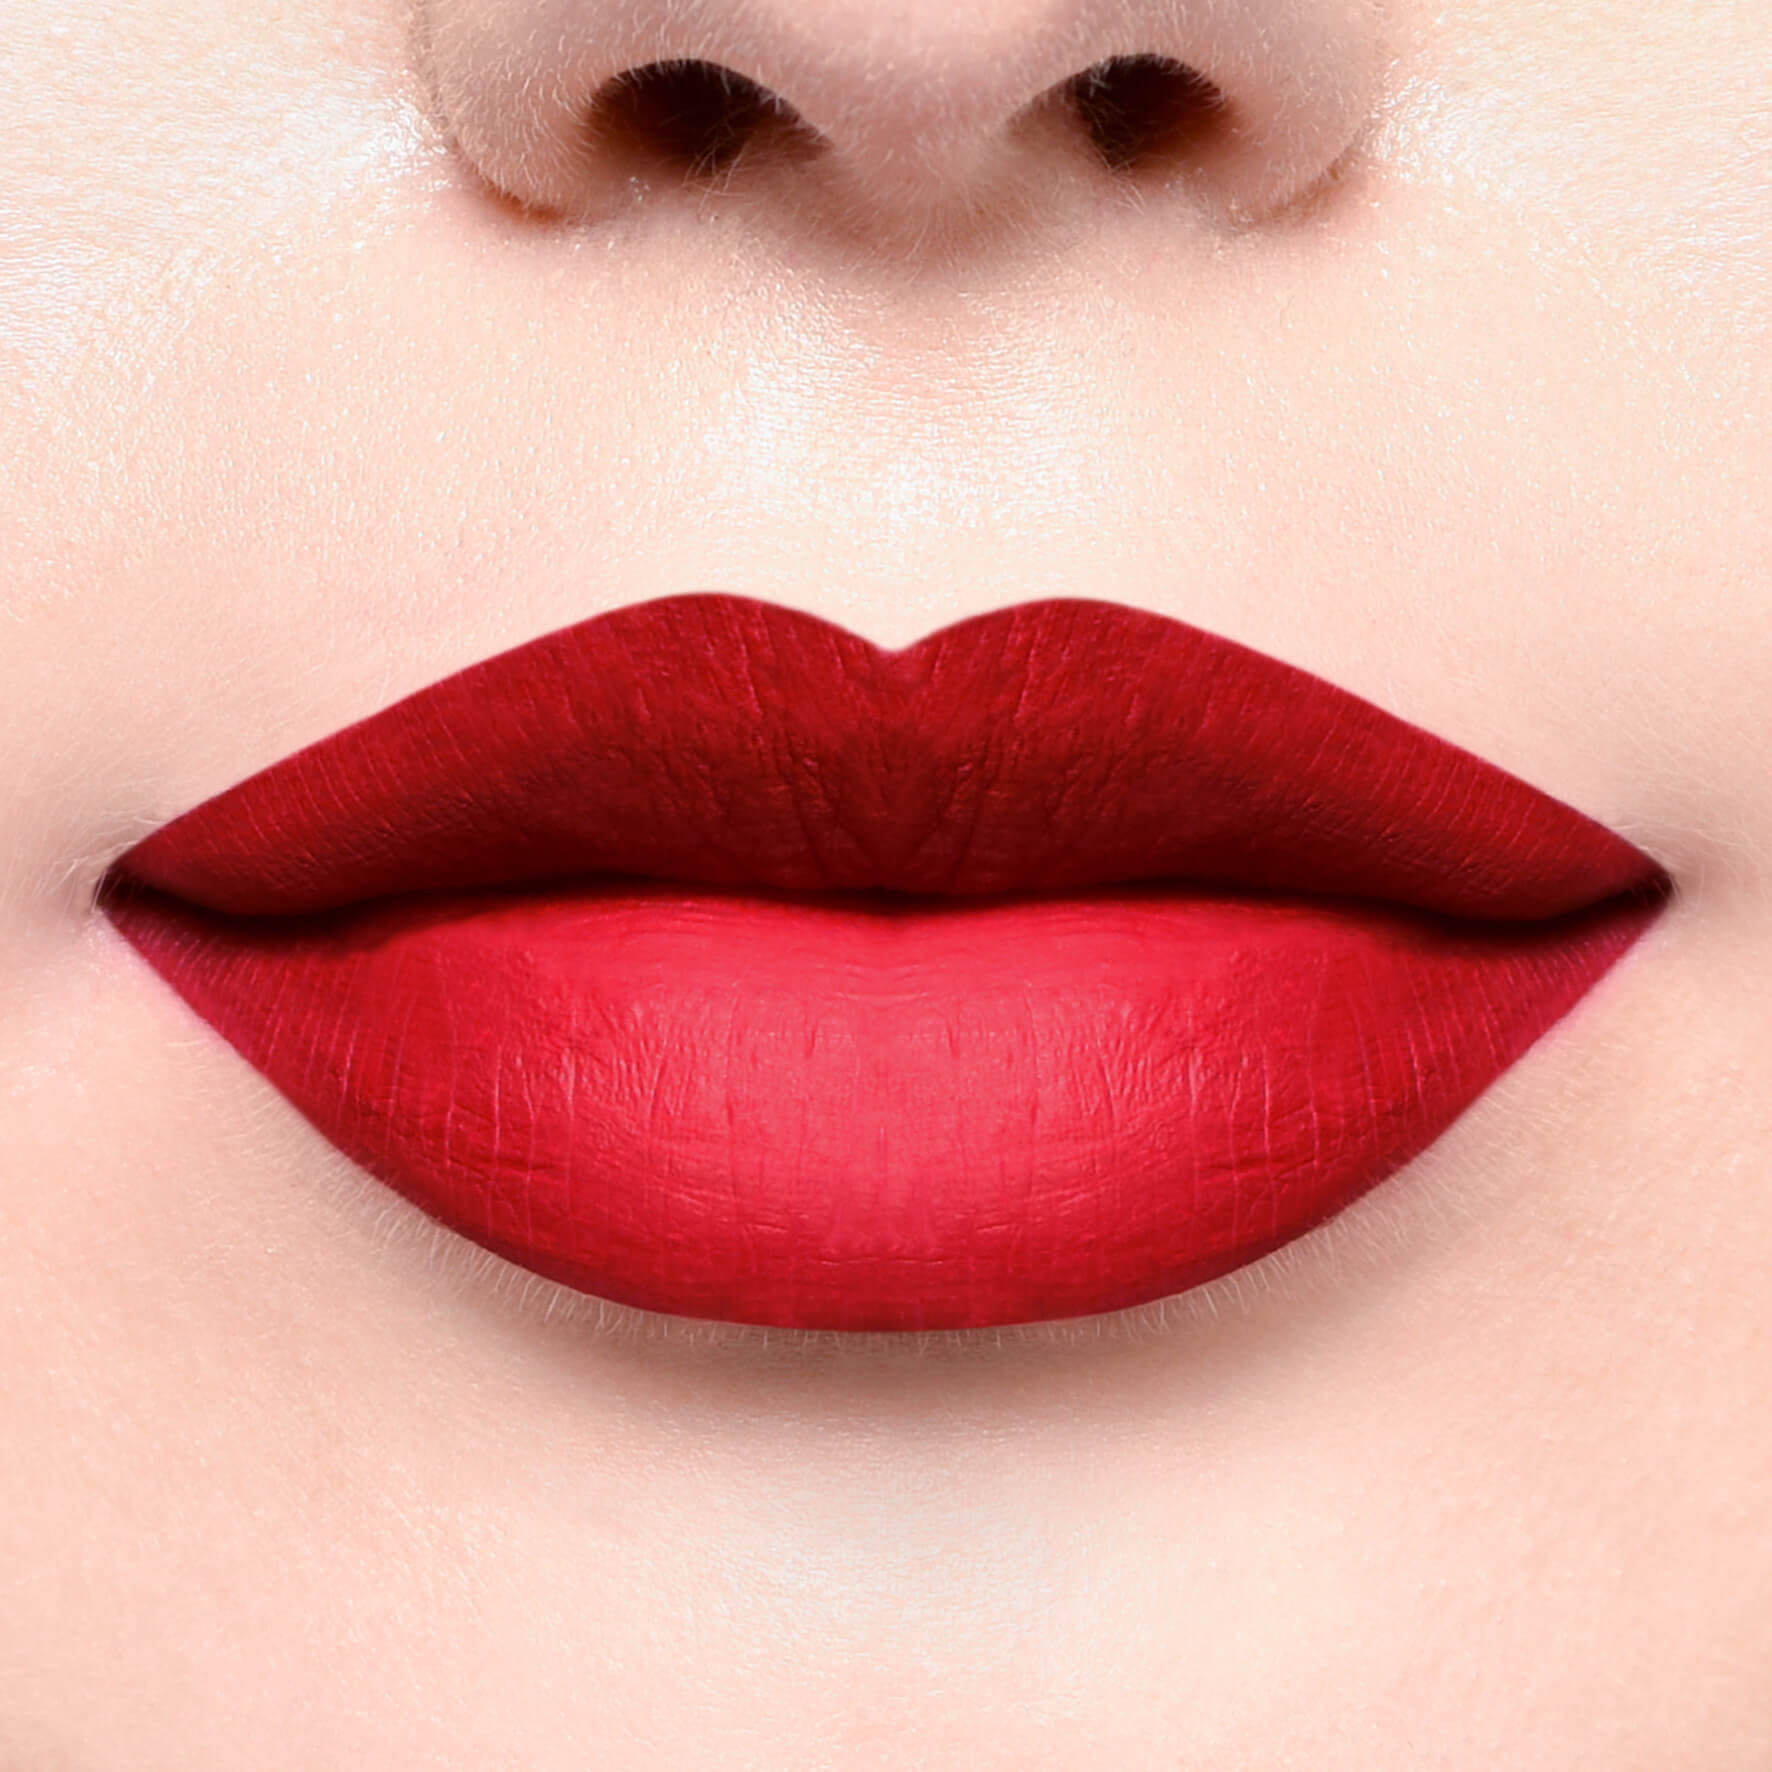 Aliexpress.com : Buy 1pcs Brand New Makeup Pink Baby Lips 